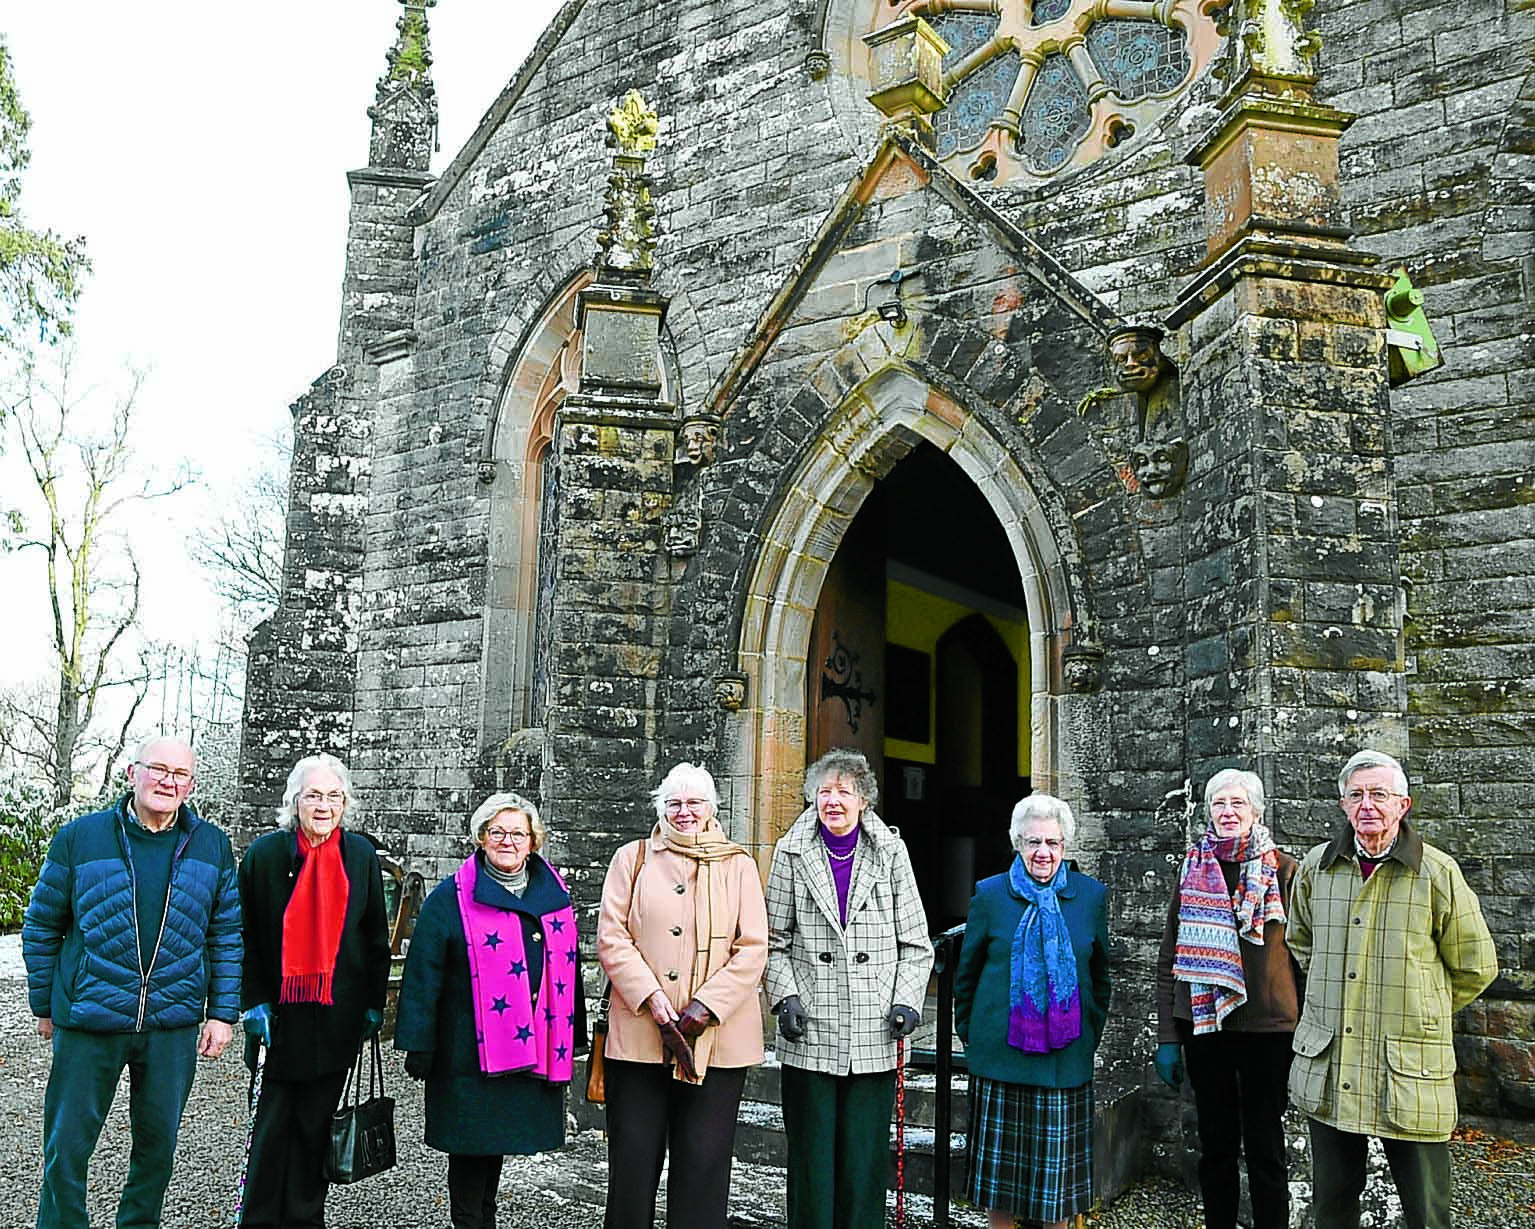 Bell tolls for village church